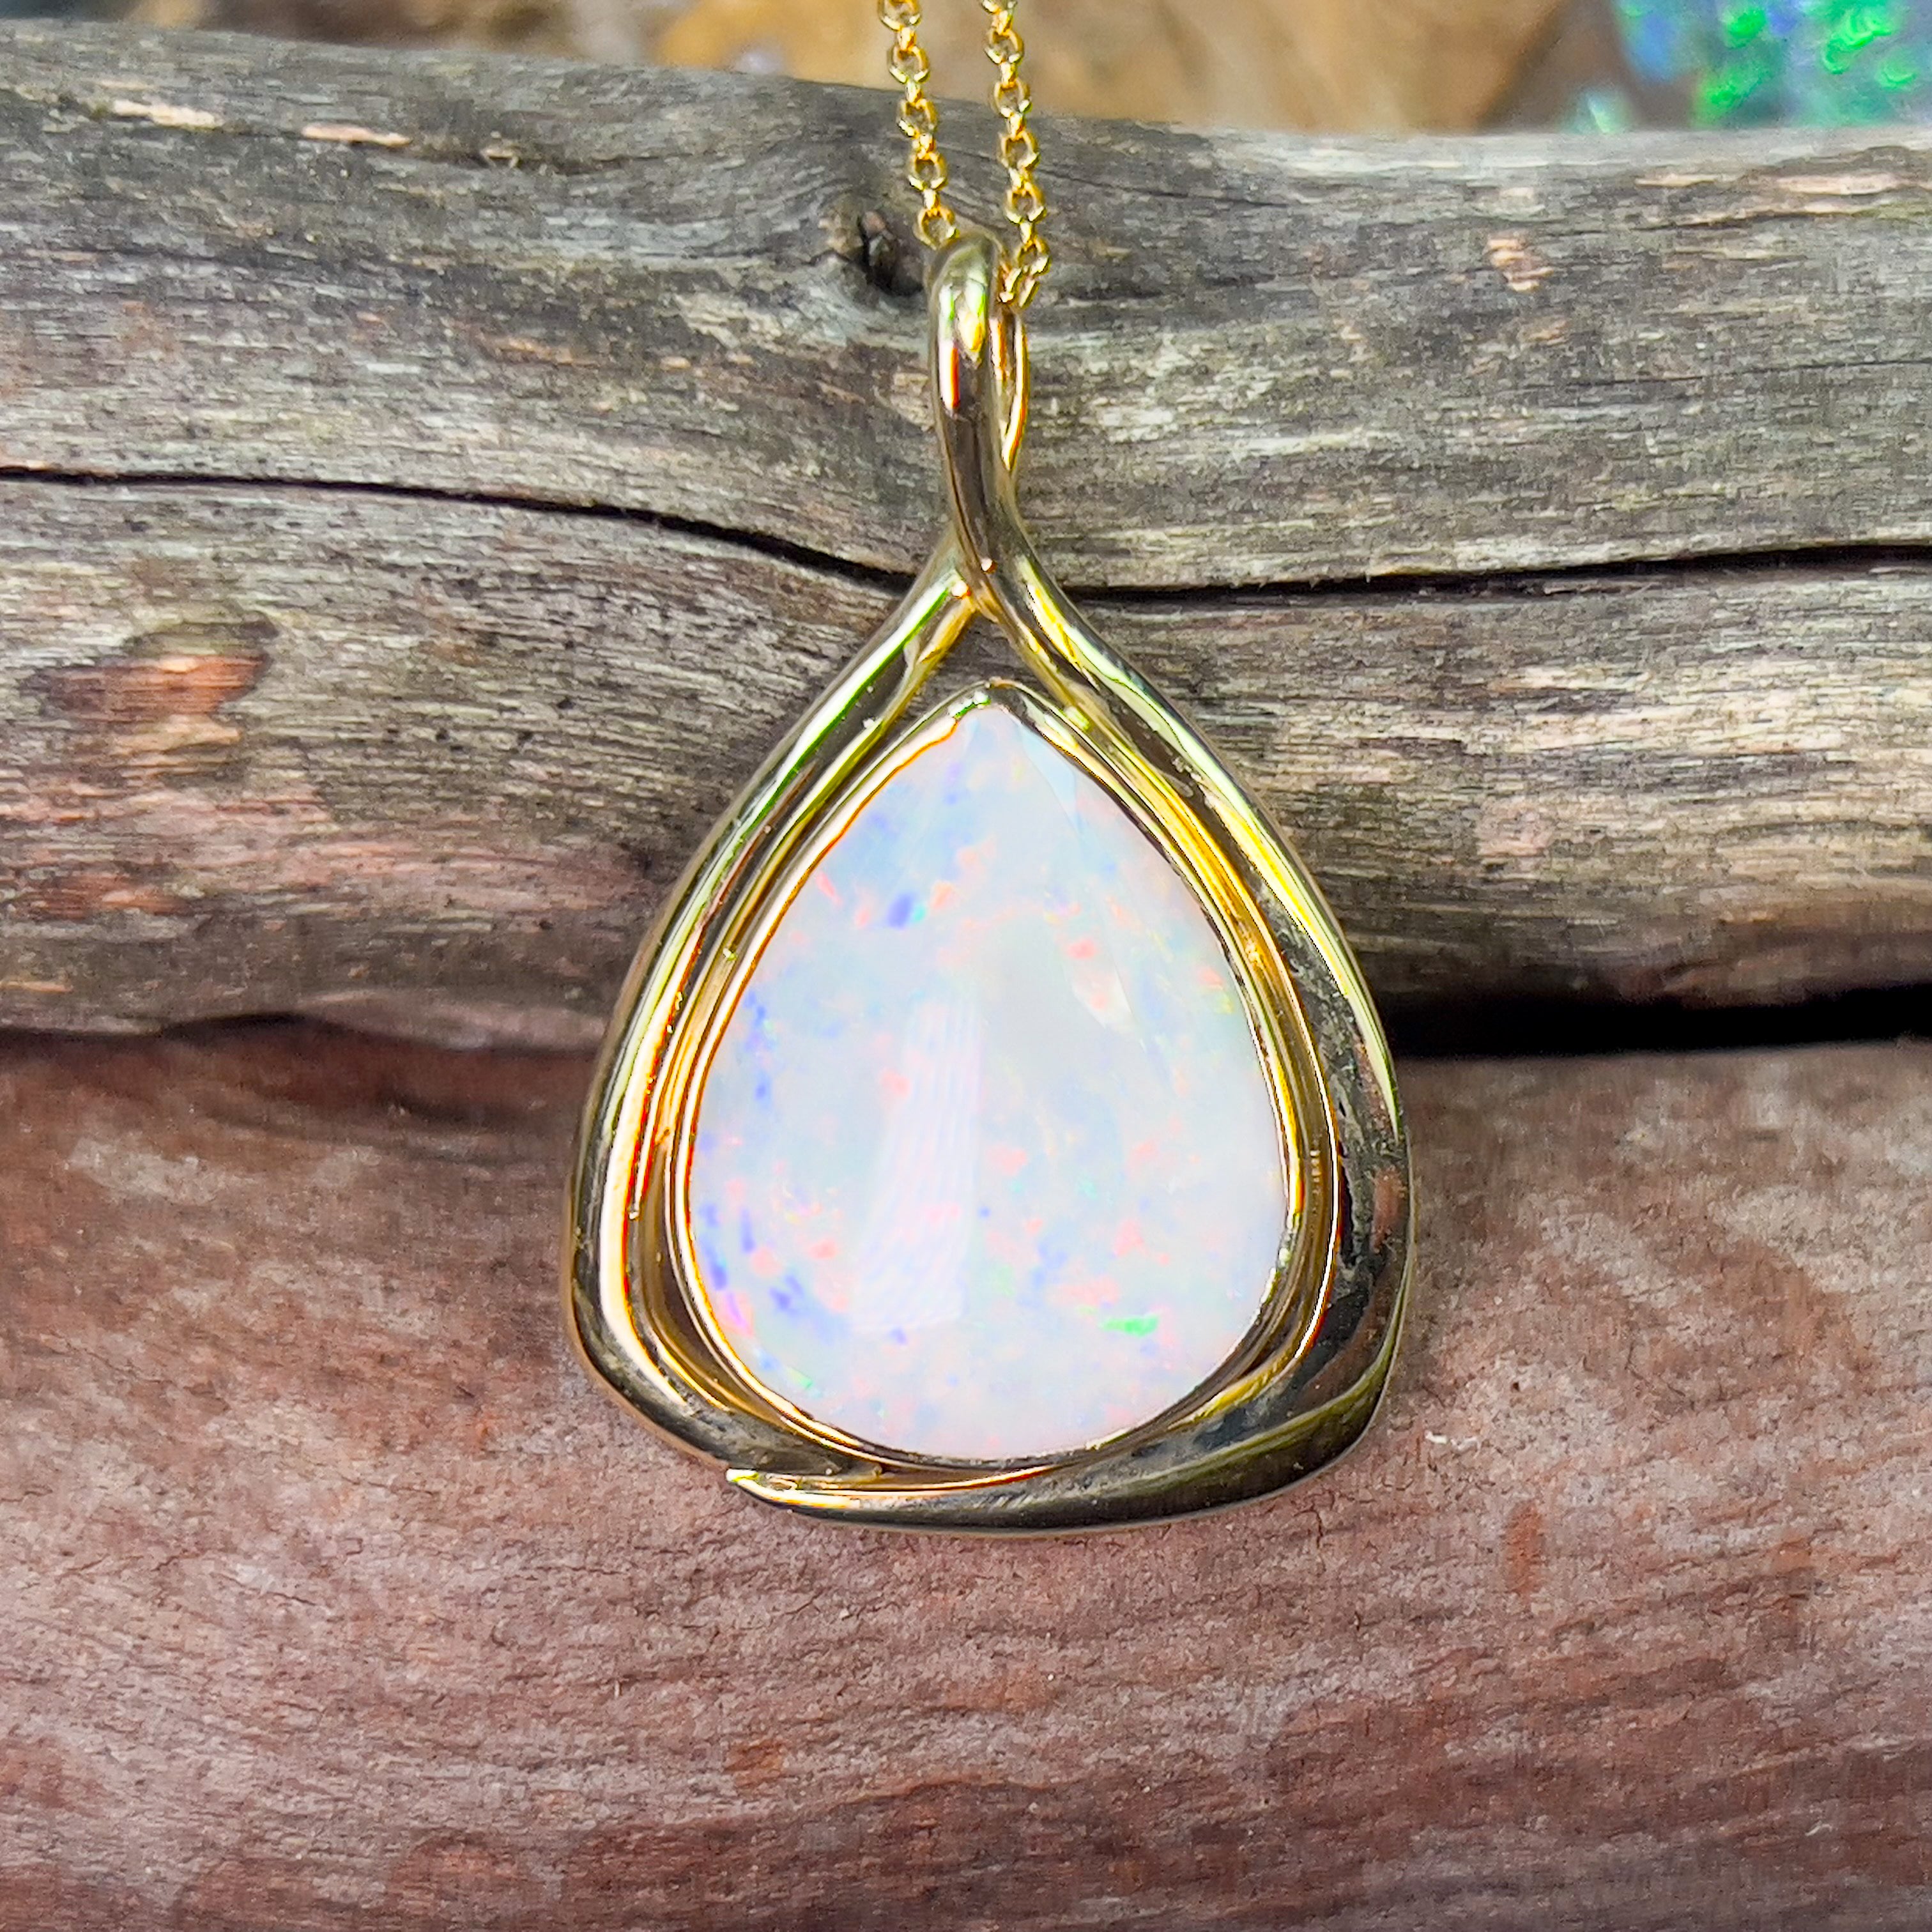 18kt Yellow Gold pear shape White Opal 7.82ct pendant - Masterpiece Jewellery Opal & Gems Sydney Australia | Online Shop